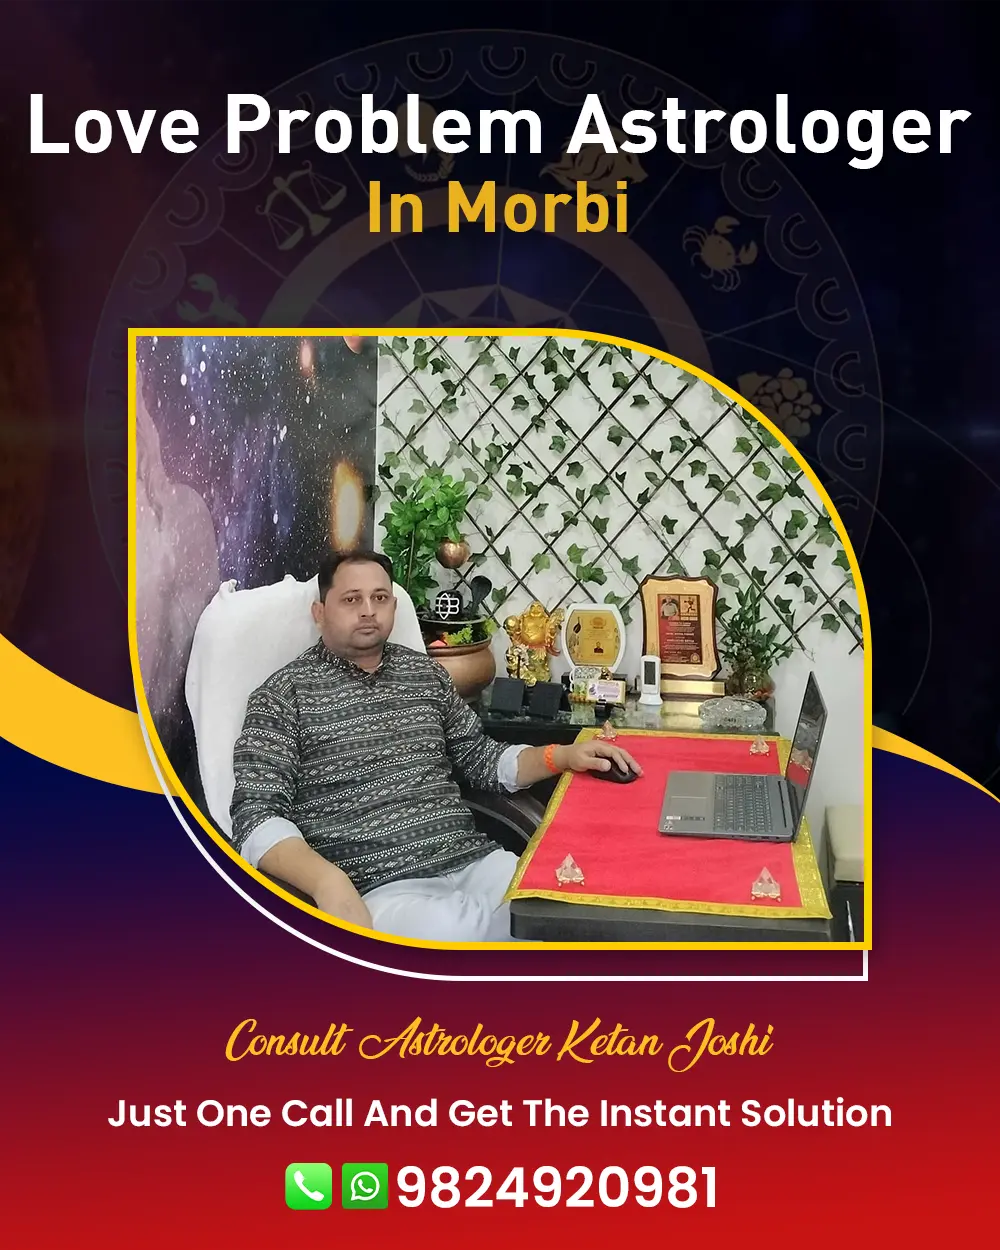 Love Problem Astrologer In Morbi